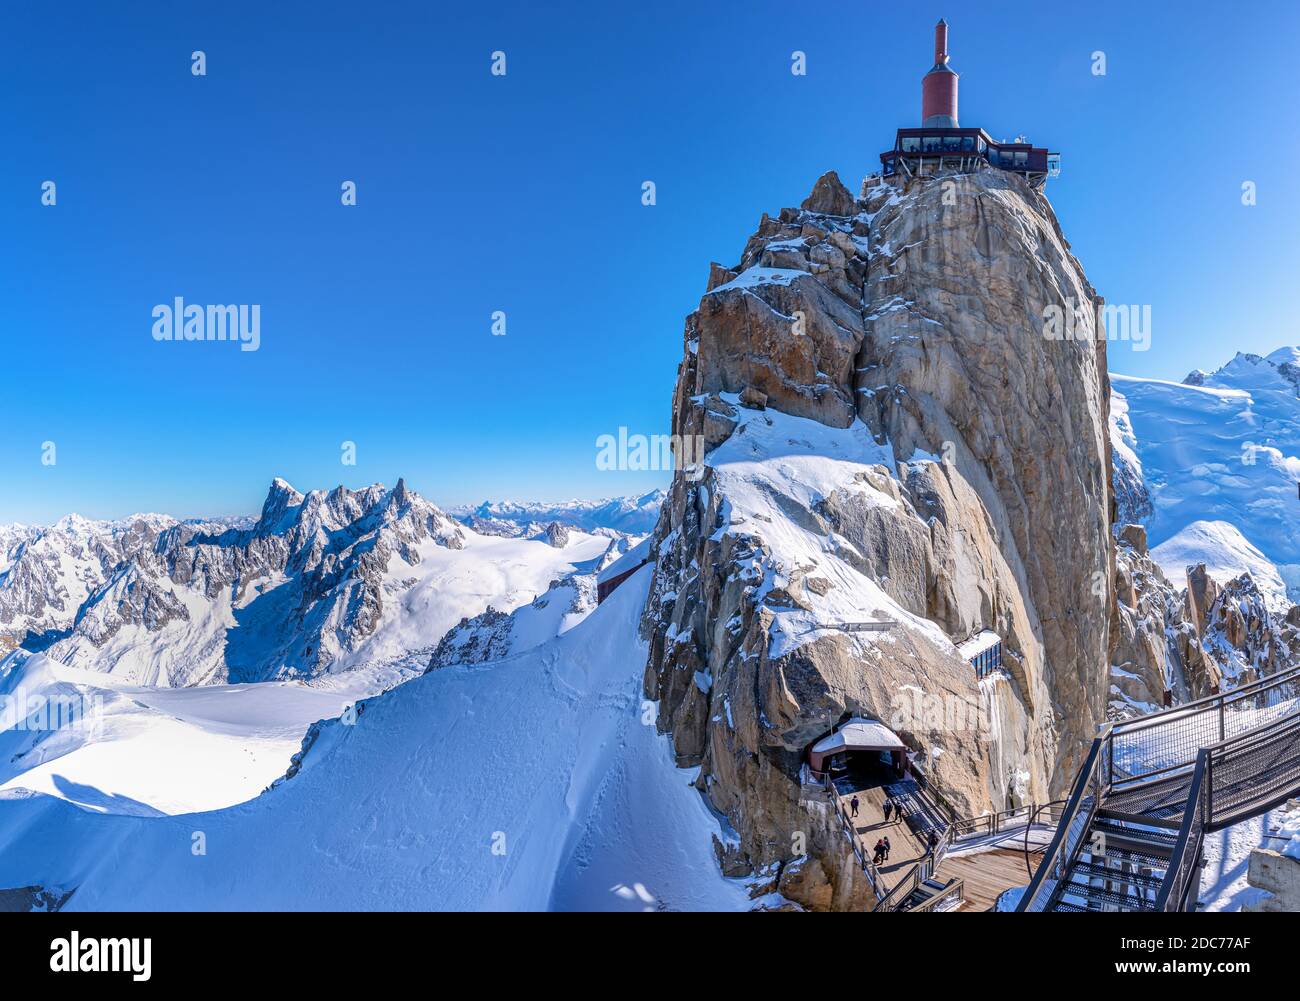 Aiguille du midi, Mont blanc, Chamonix, France Photo Stock - Alamy